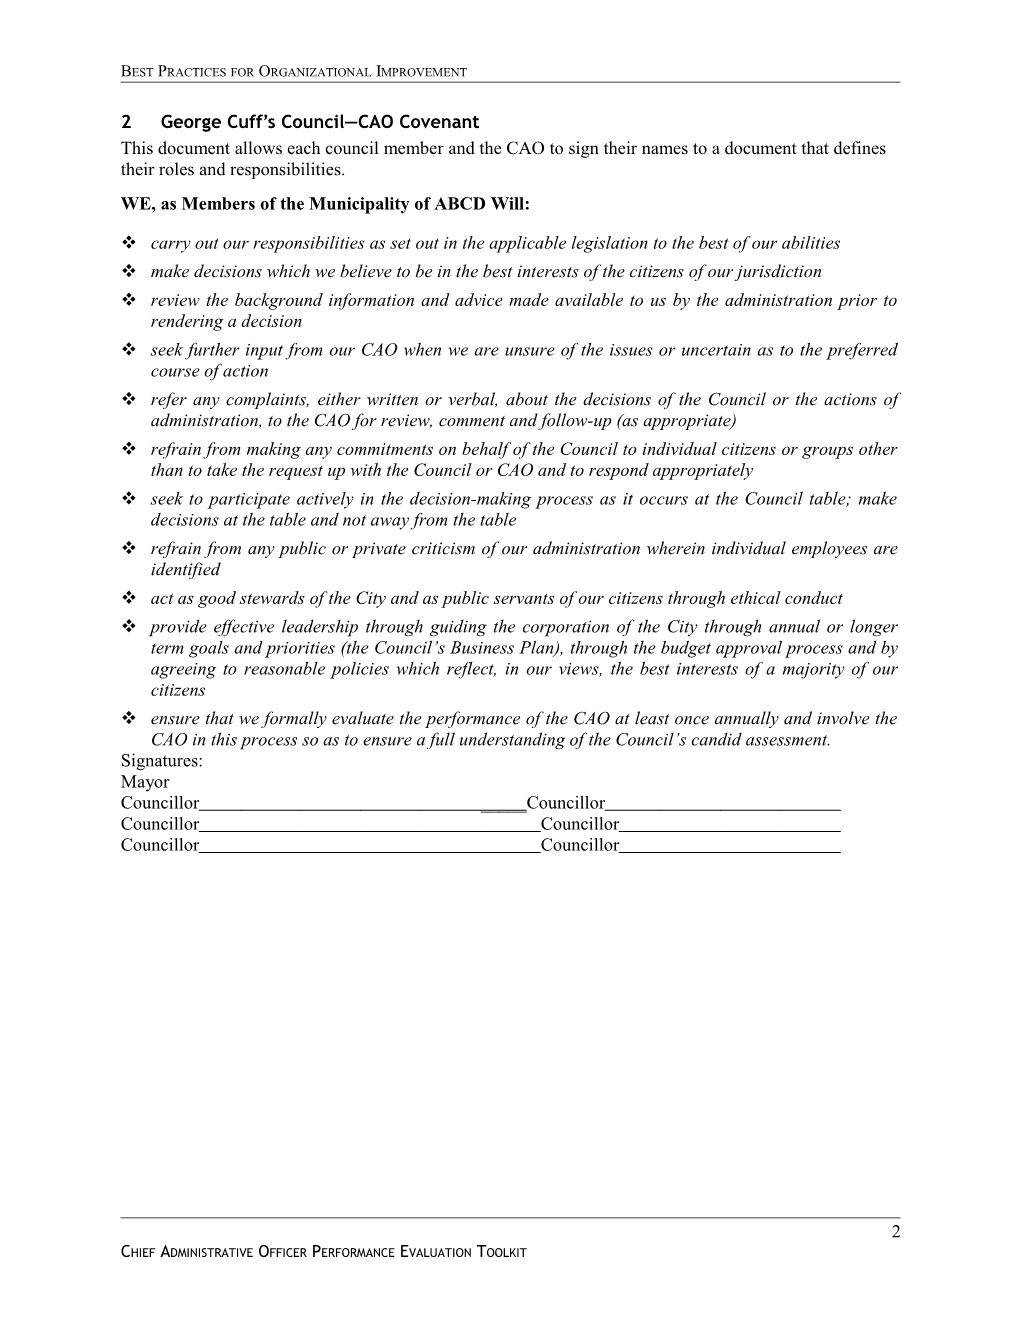 Sample Documents for Organizational Improvement